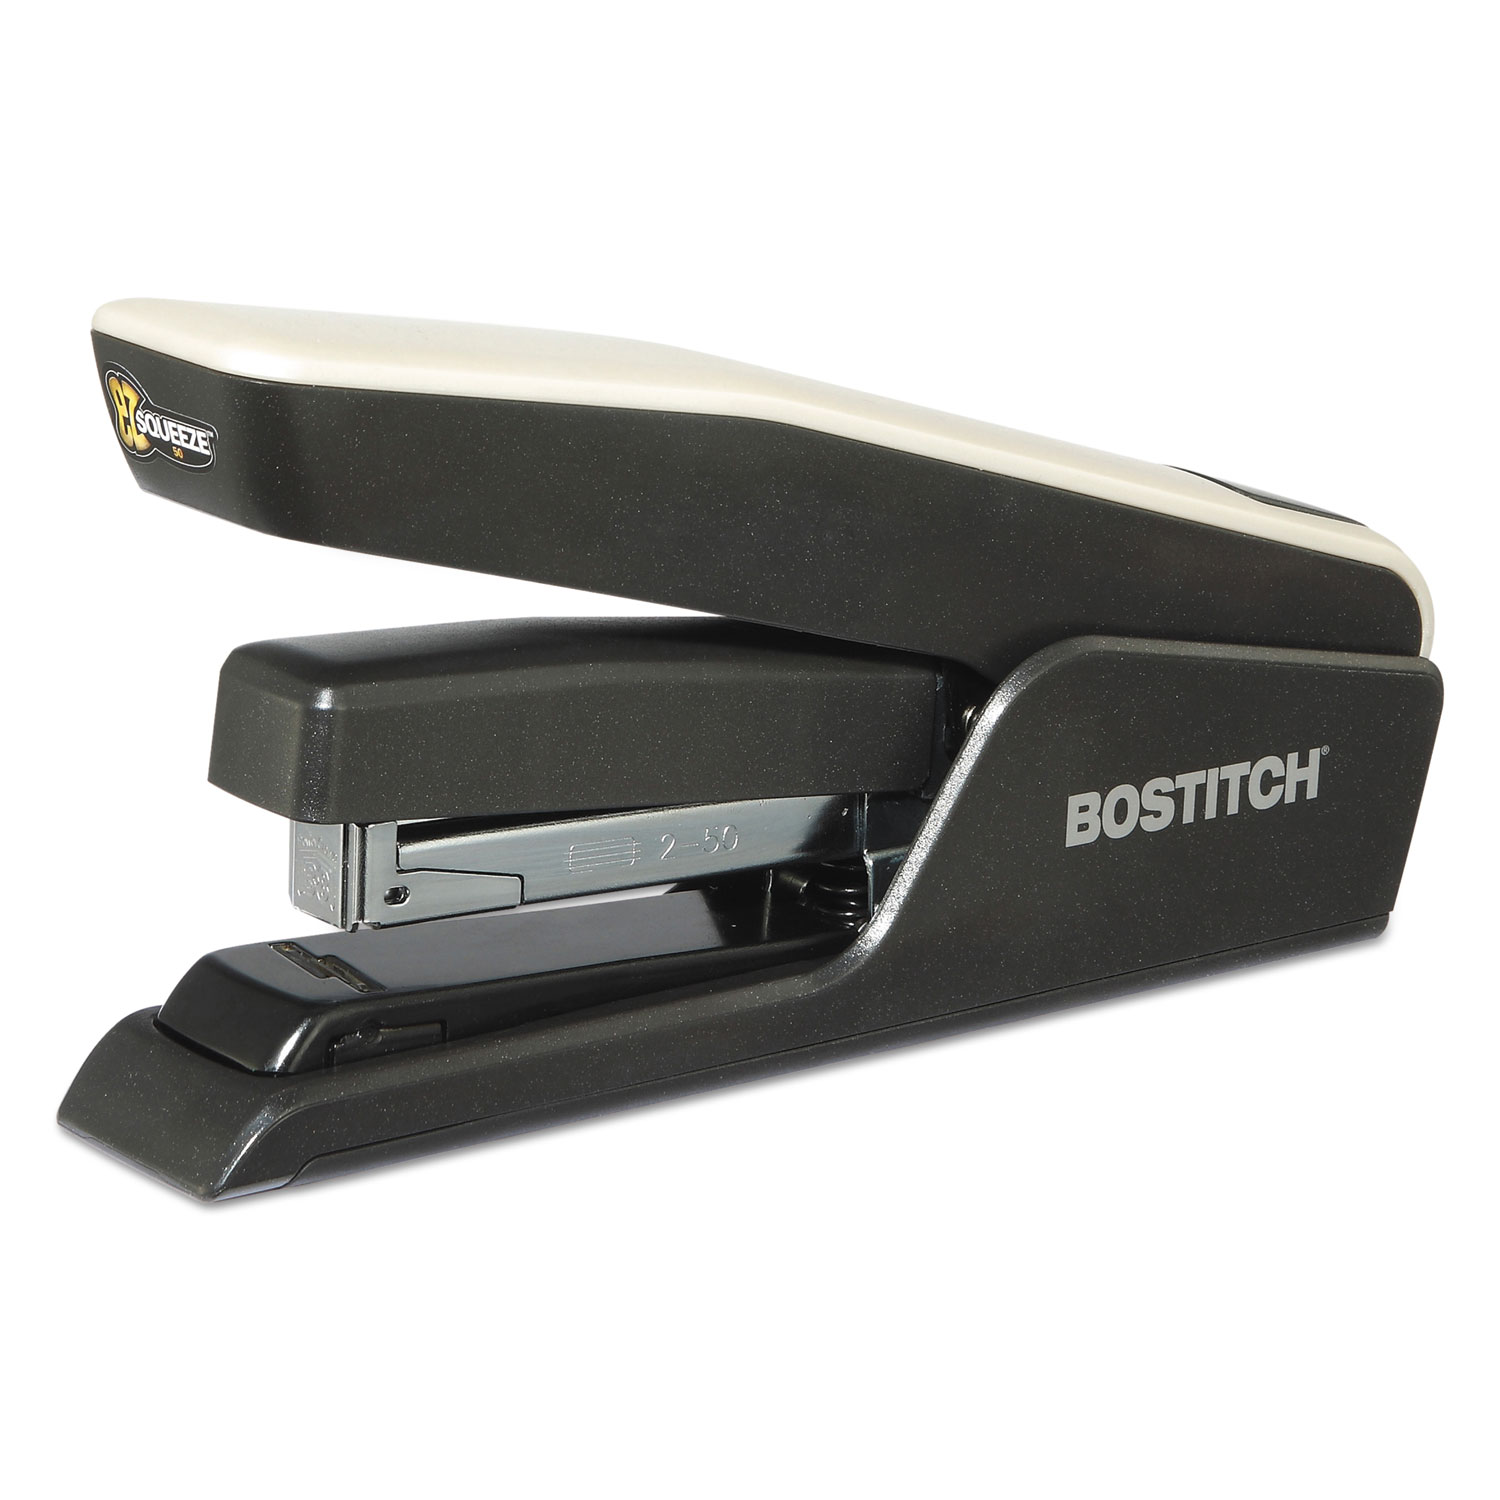  Bostitch B850-BLK EZ Squeeze 50 Stapler, 50-Sheet Capacity, Black (BOSB850BLK) 